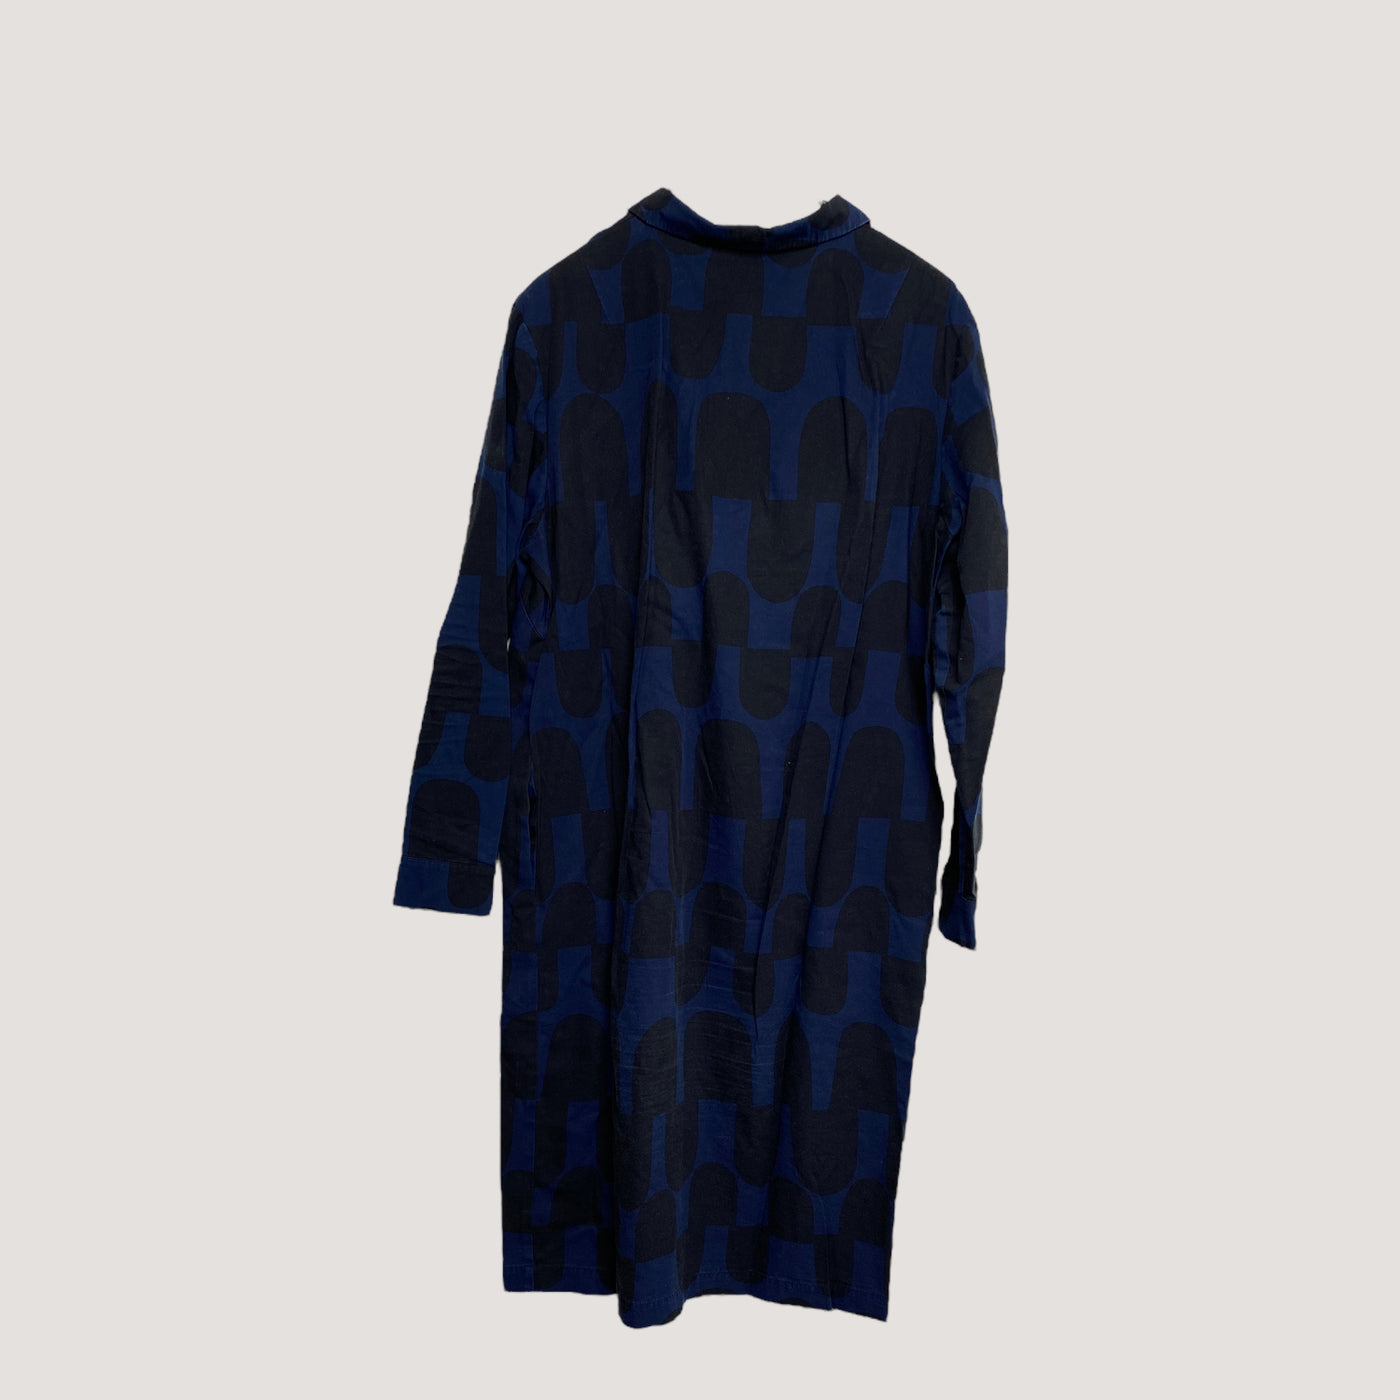 Marimekko Hoosi dress, midnight blue/black | woman 44